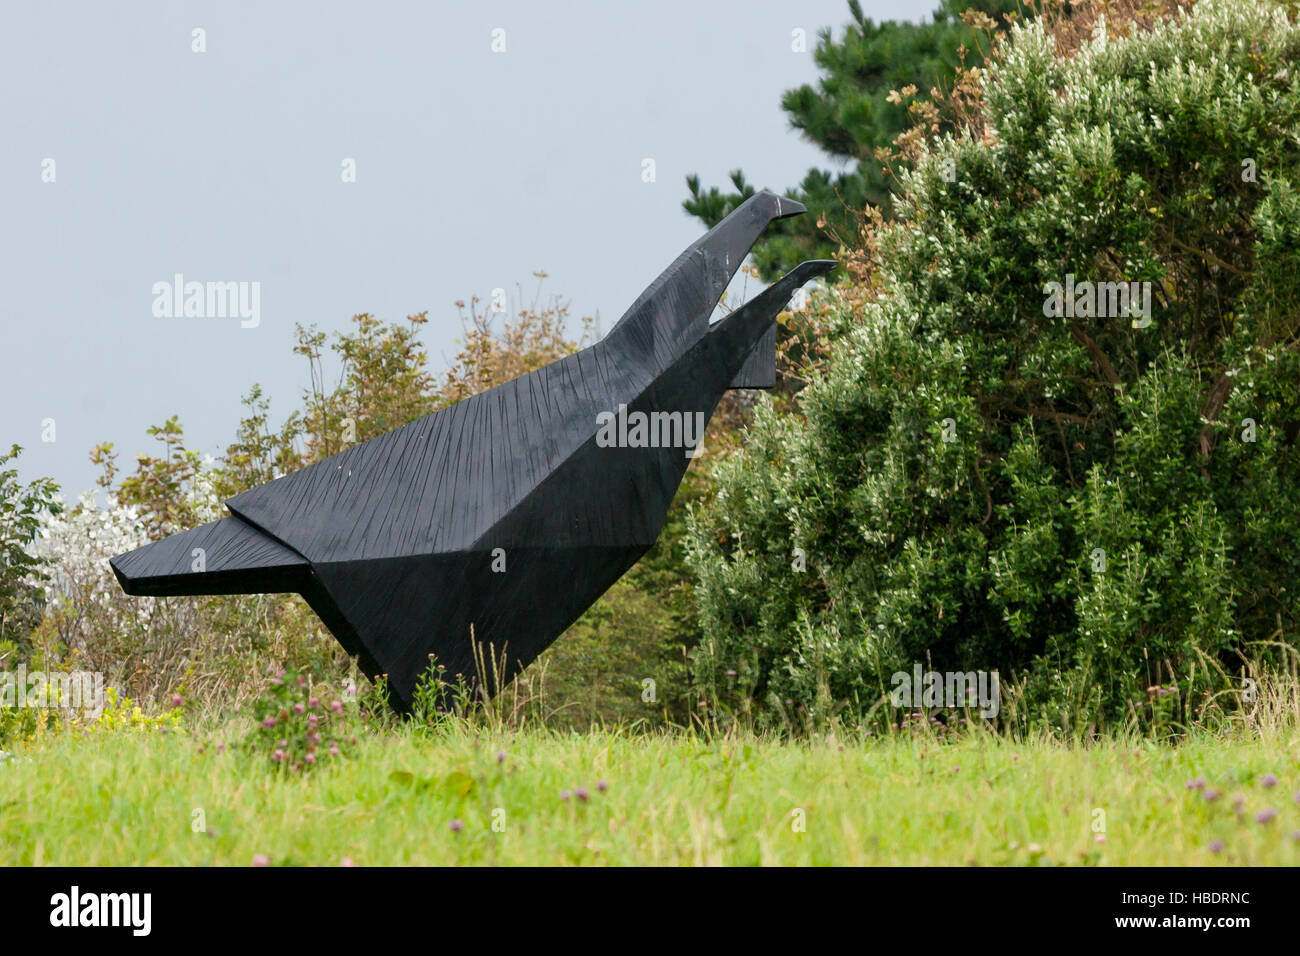 modern art outside sculpture of bird in black Stock Photo